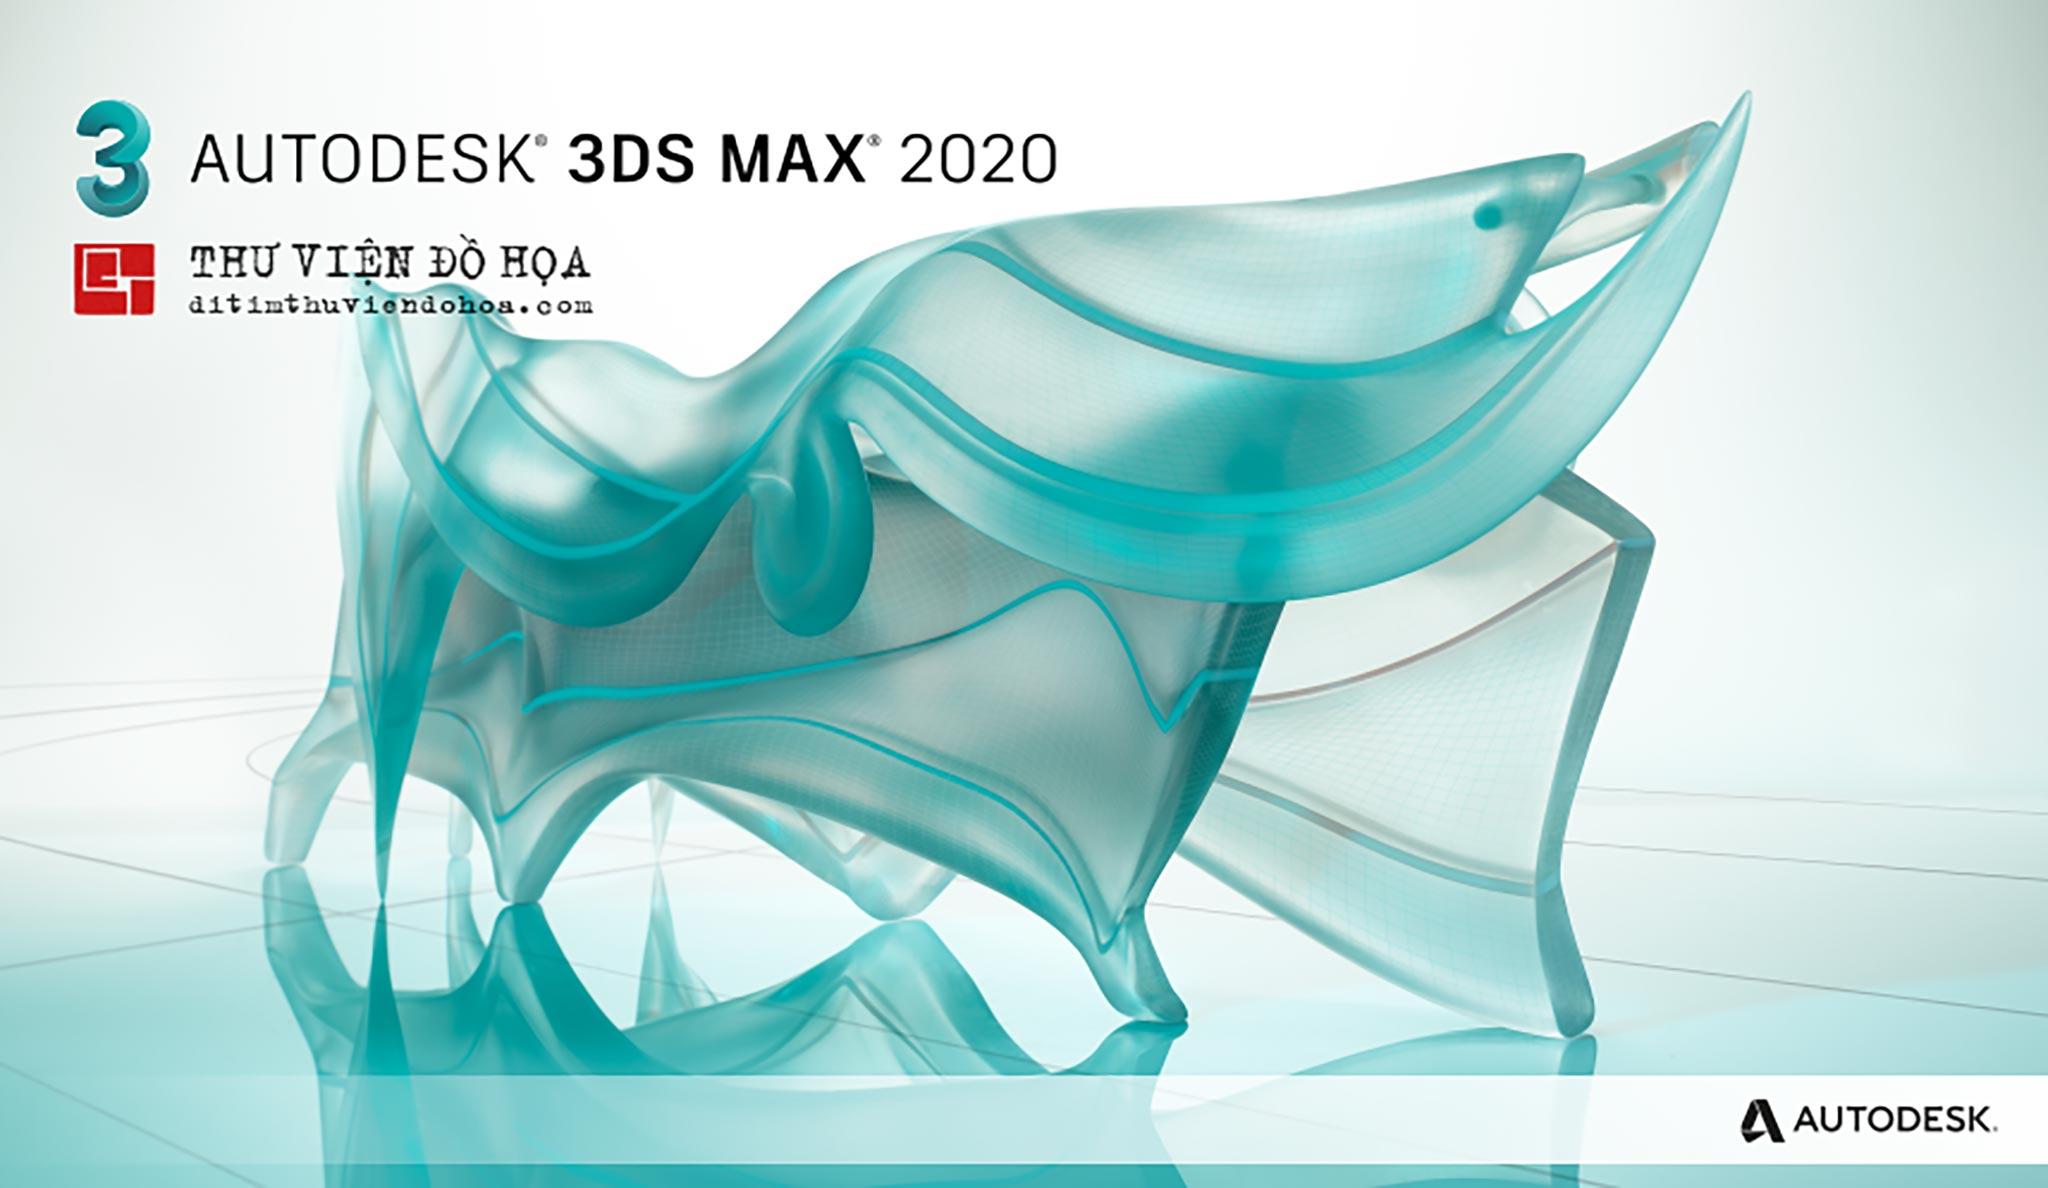 [Applications] Autodesk 3dsMax 2020